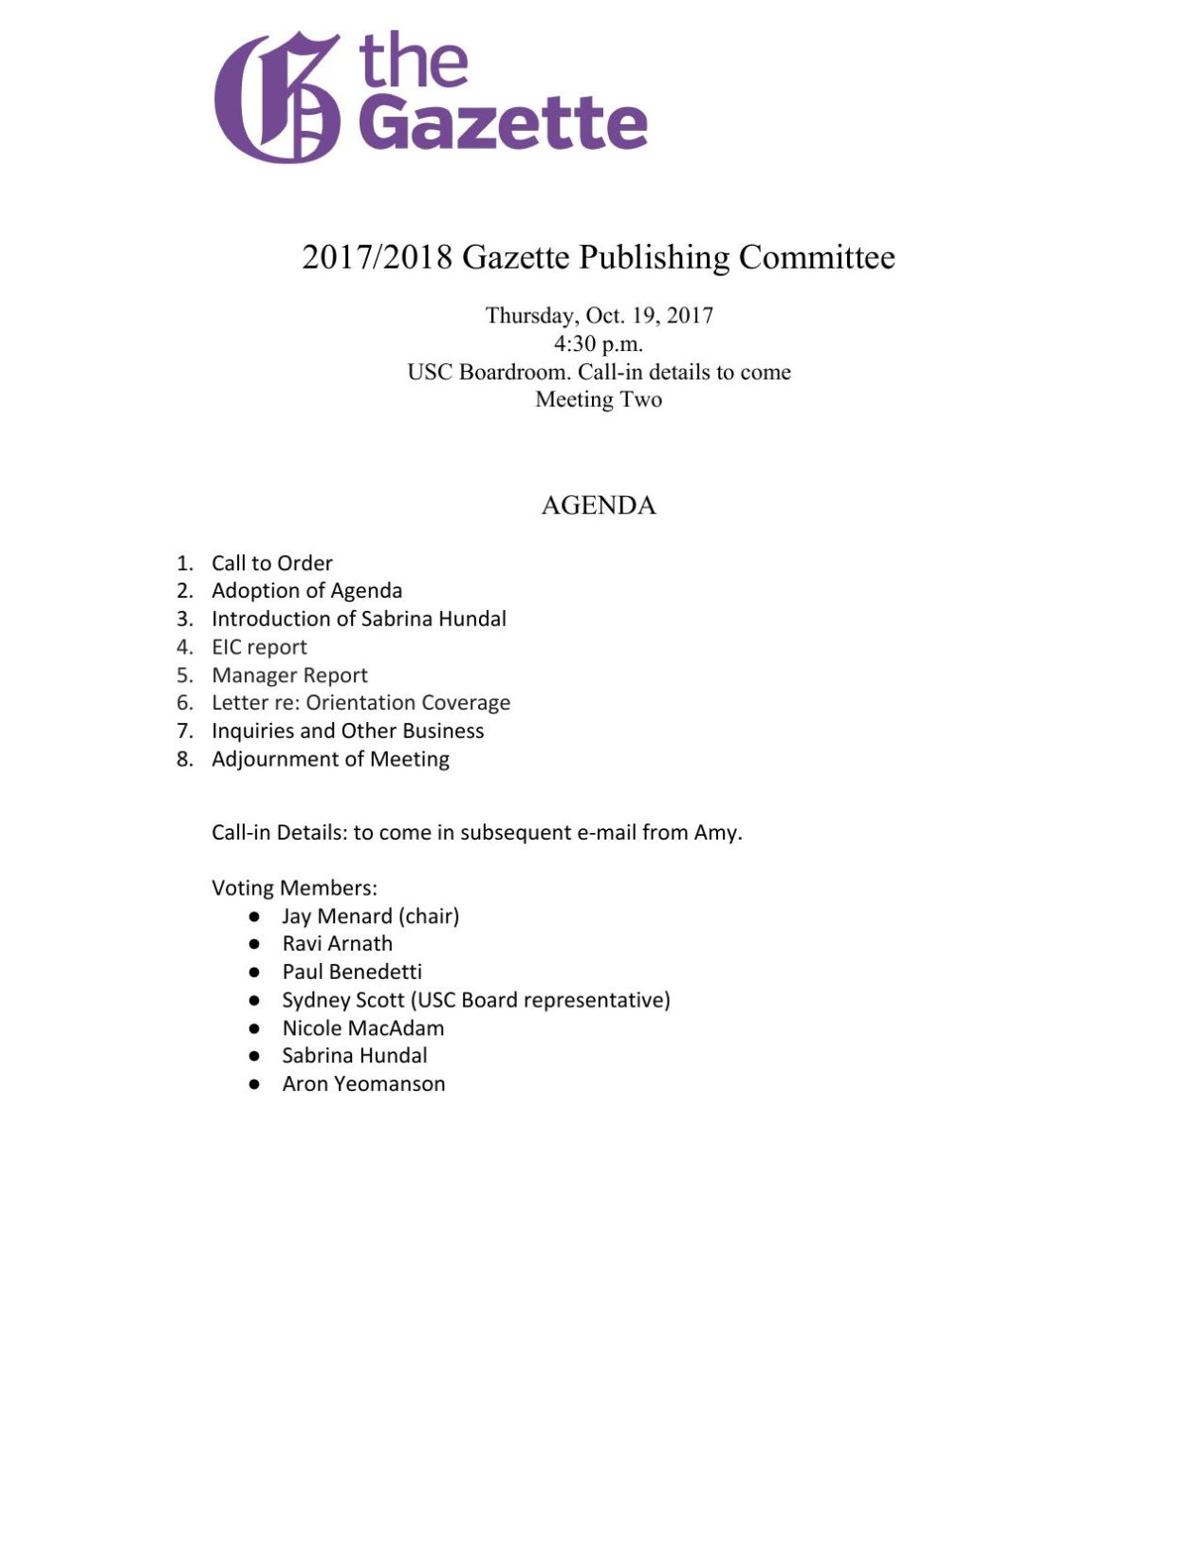 Agenda and documents Oct. 29, 2017